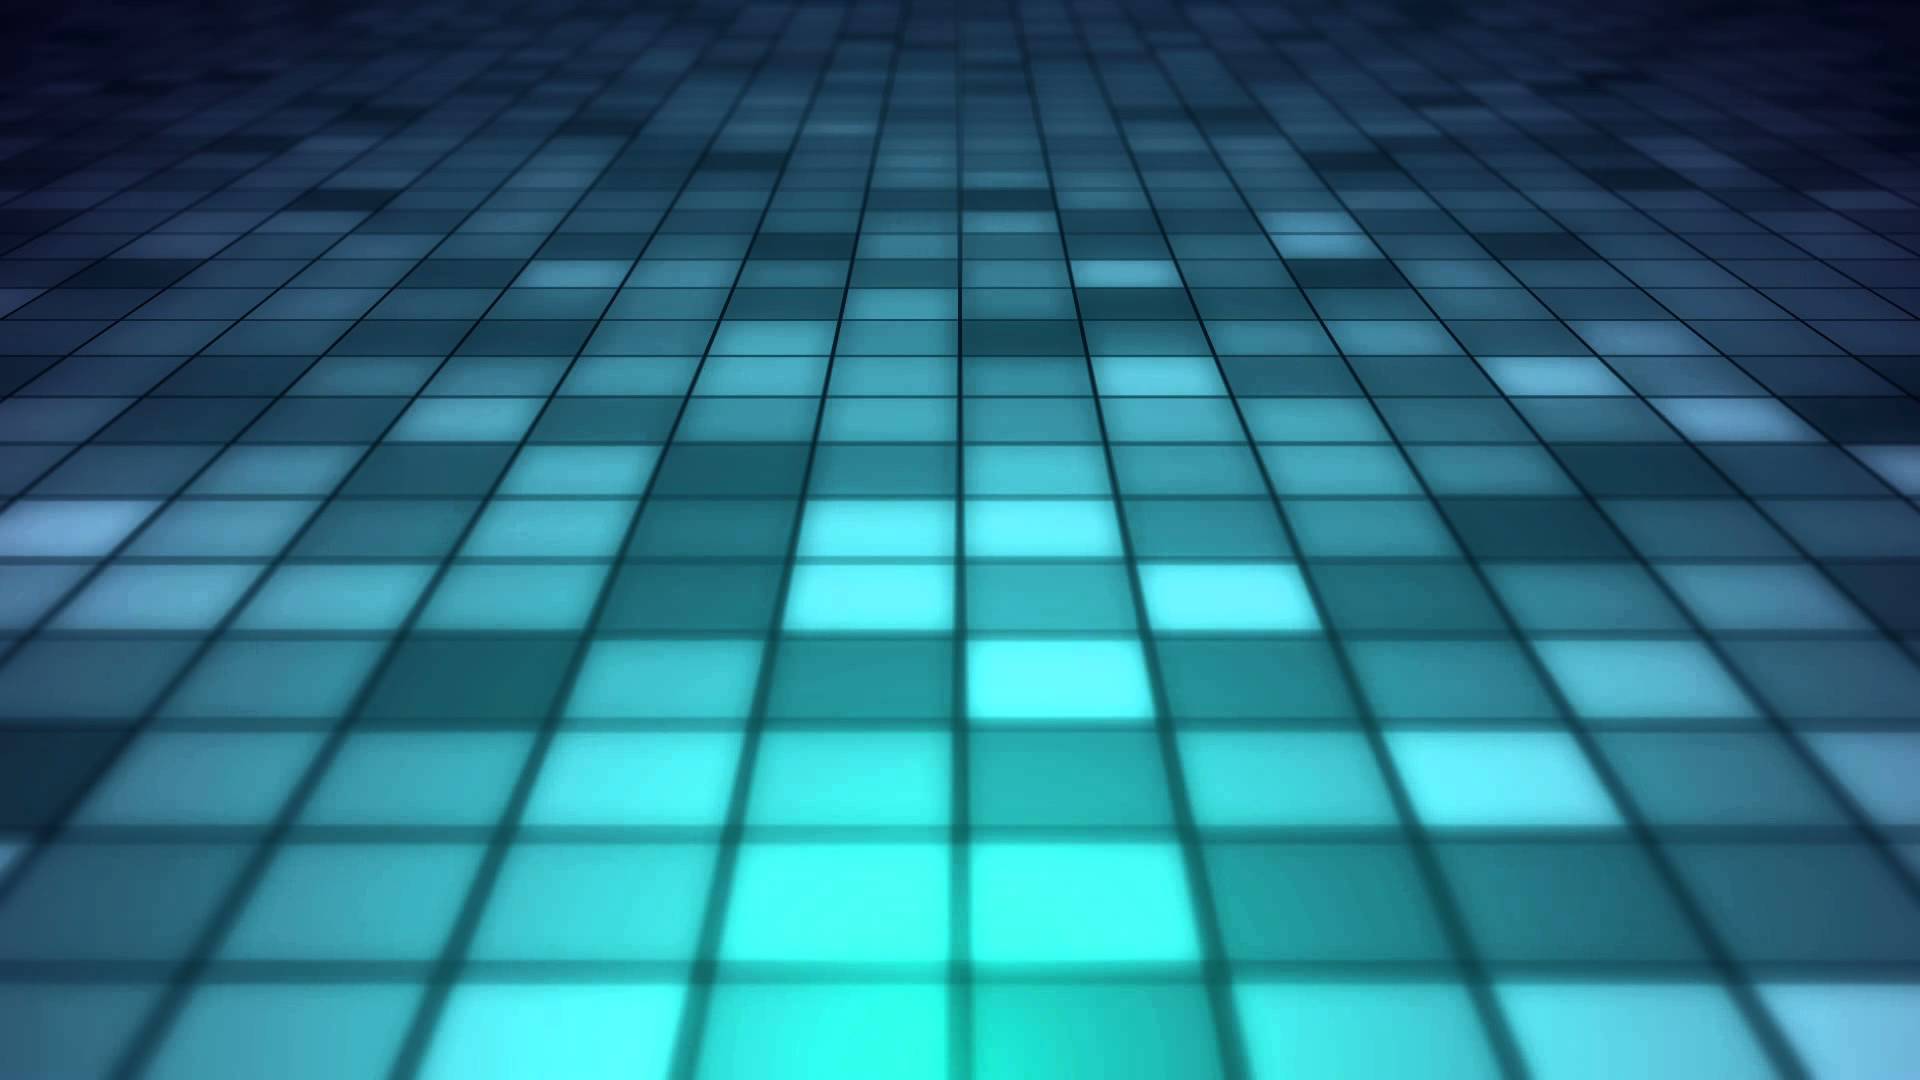 Blue Tile Floor   HD Motion Graphics Background Loop 1920x1080